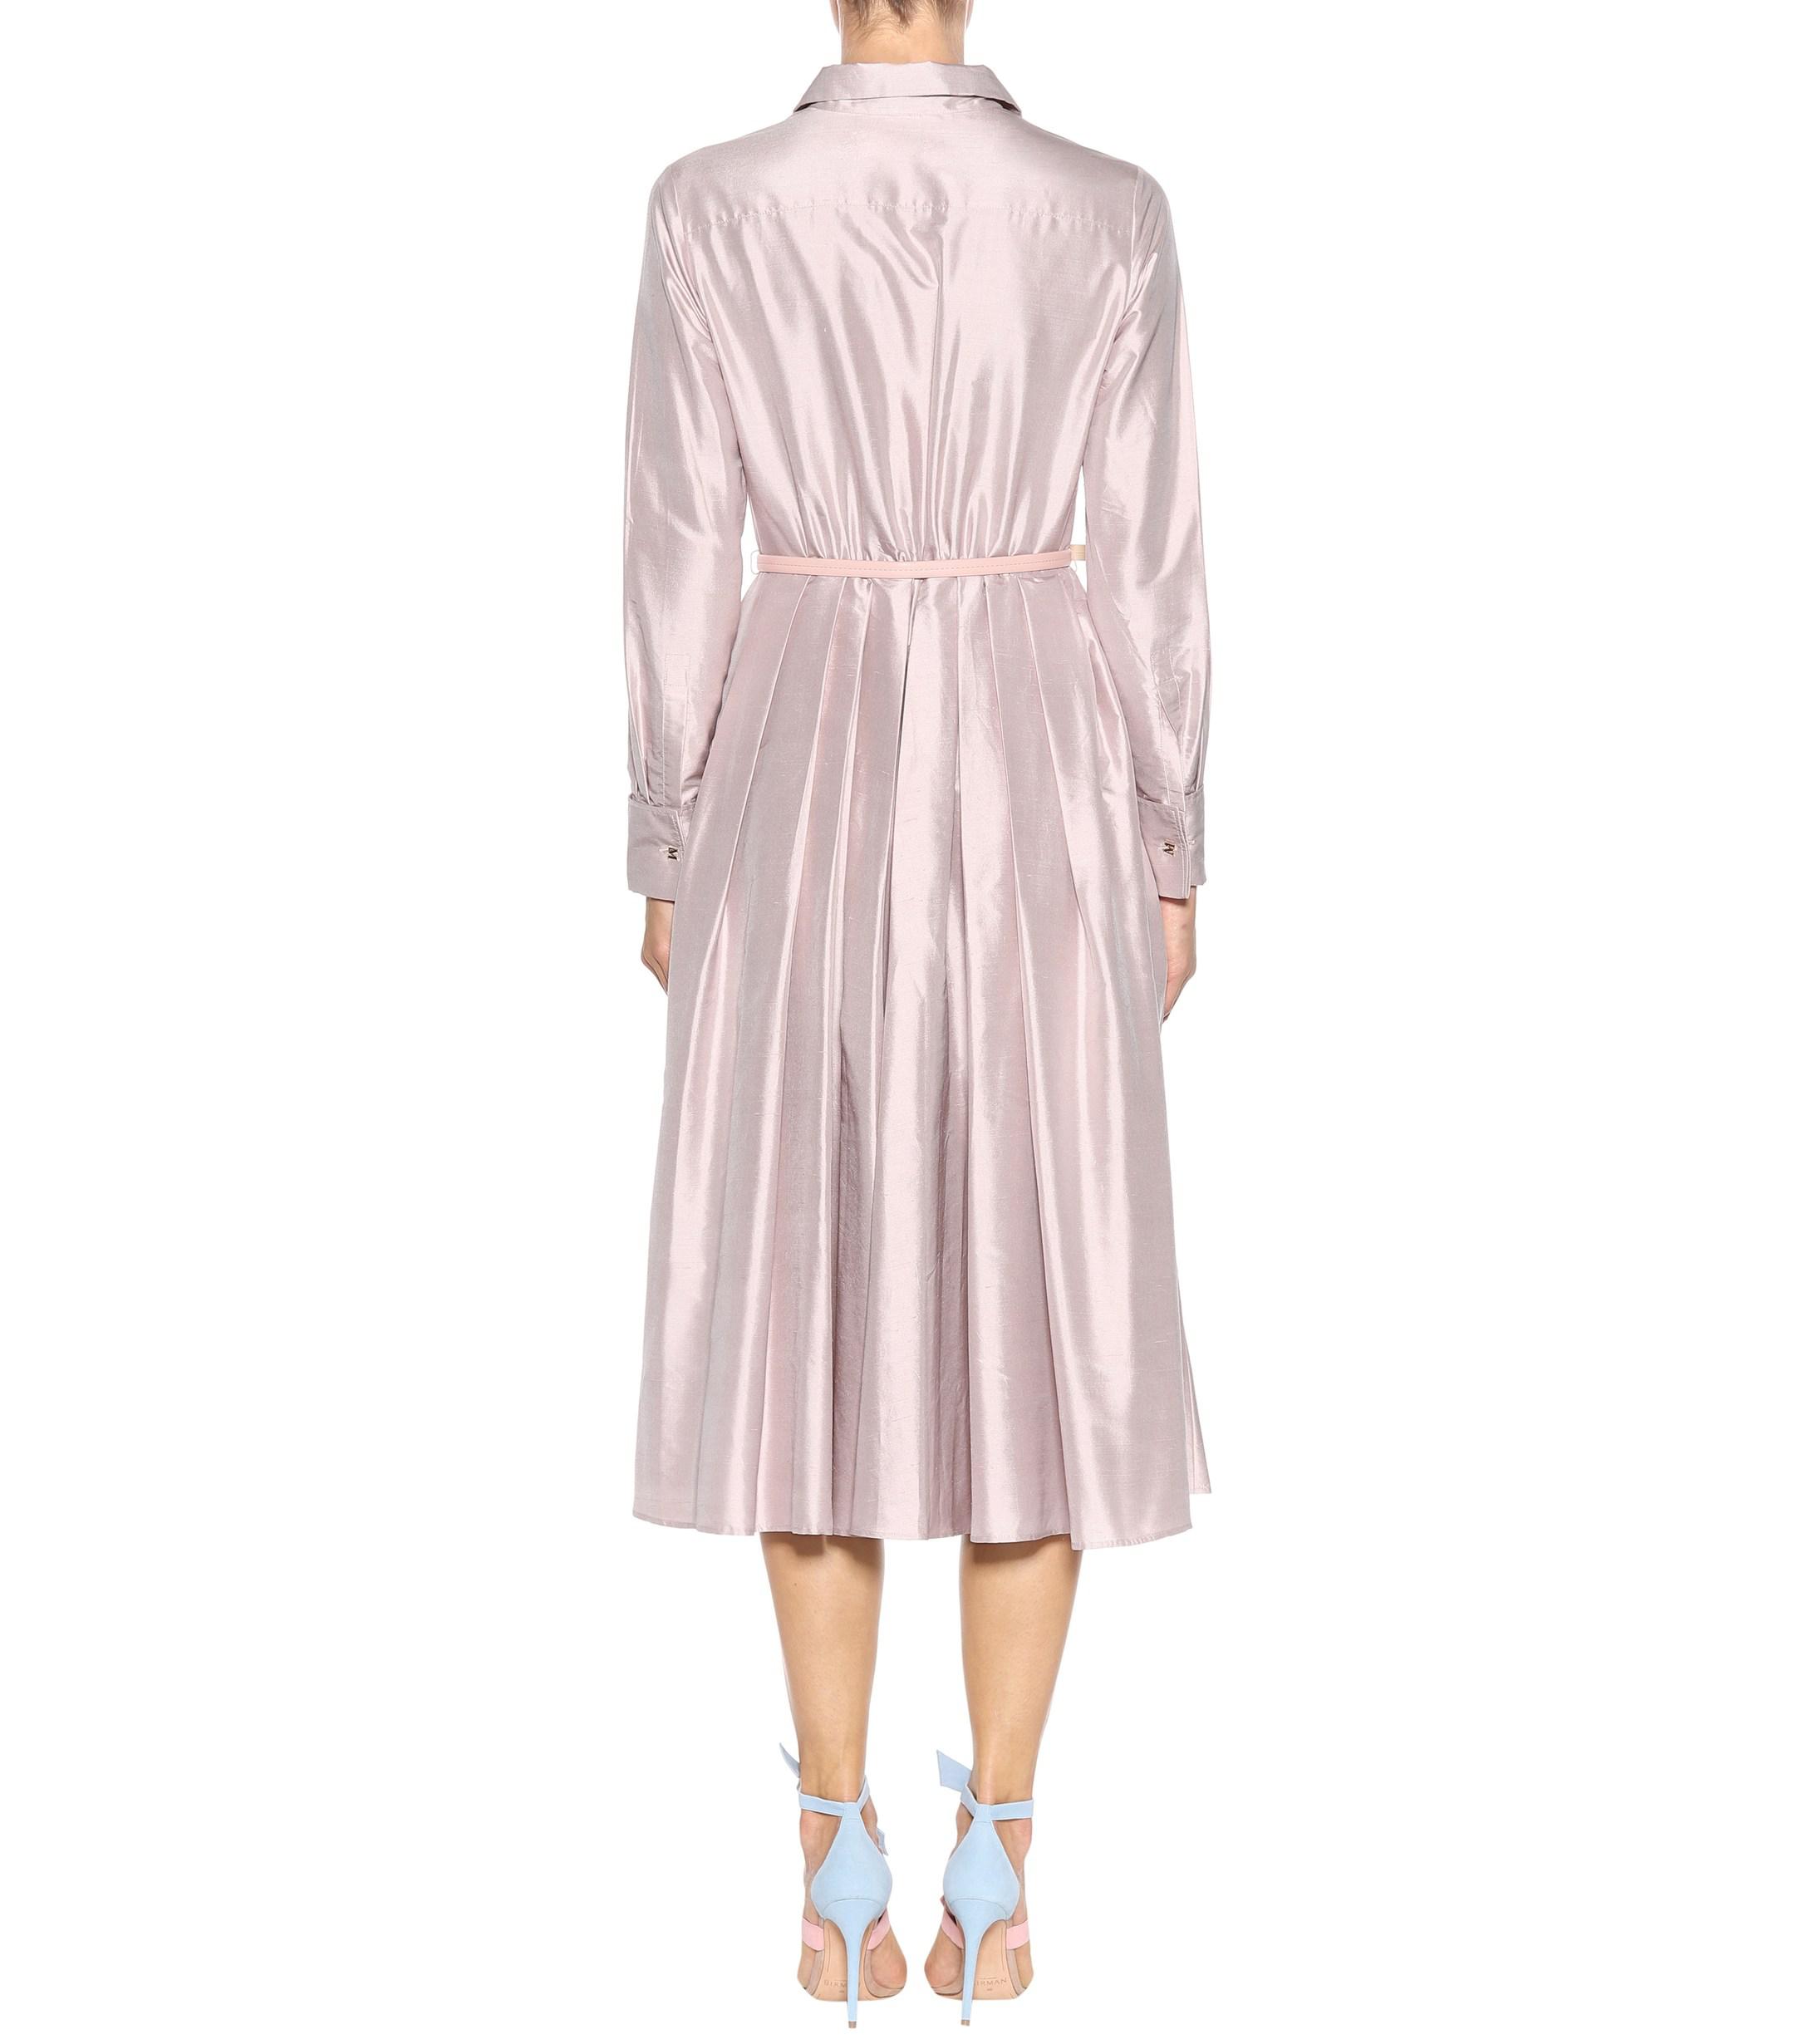 Max Mara Fiorire Silk Satin Dress in Light Rose (Pink) - Lyst